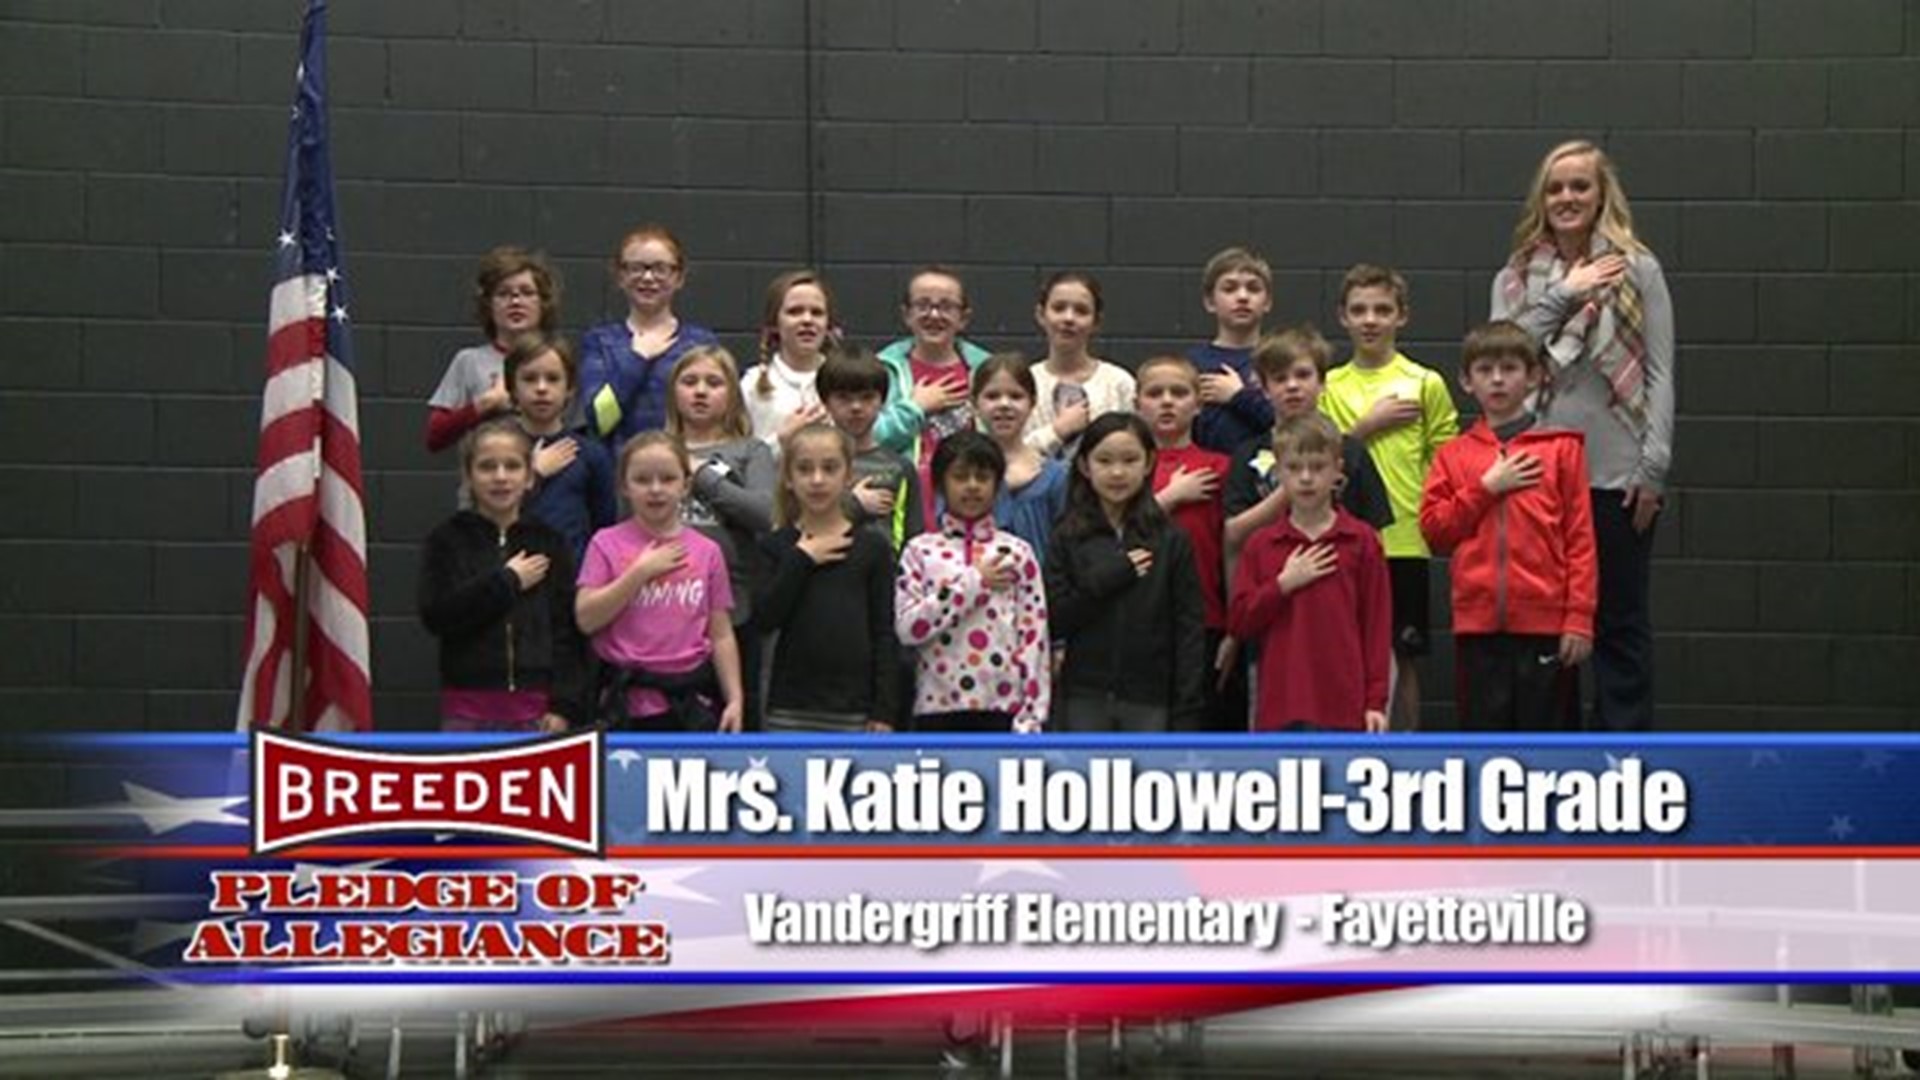 Vandergriff Elementary, Fayetteville - Mrs. Katie Hollowell - 3rd Grade